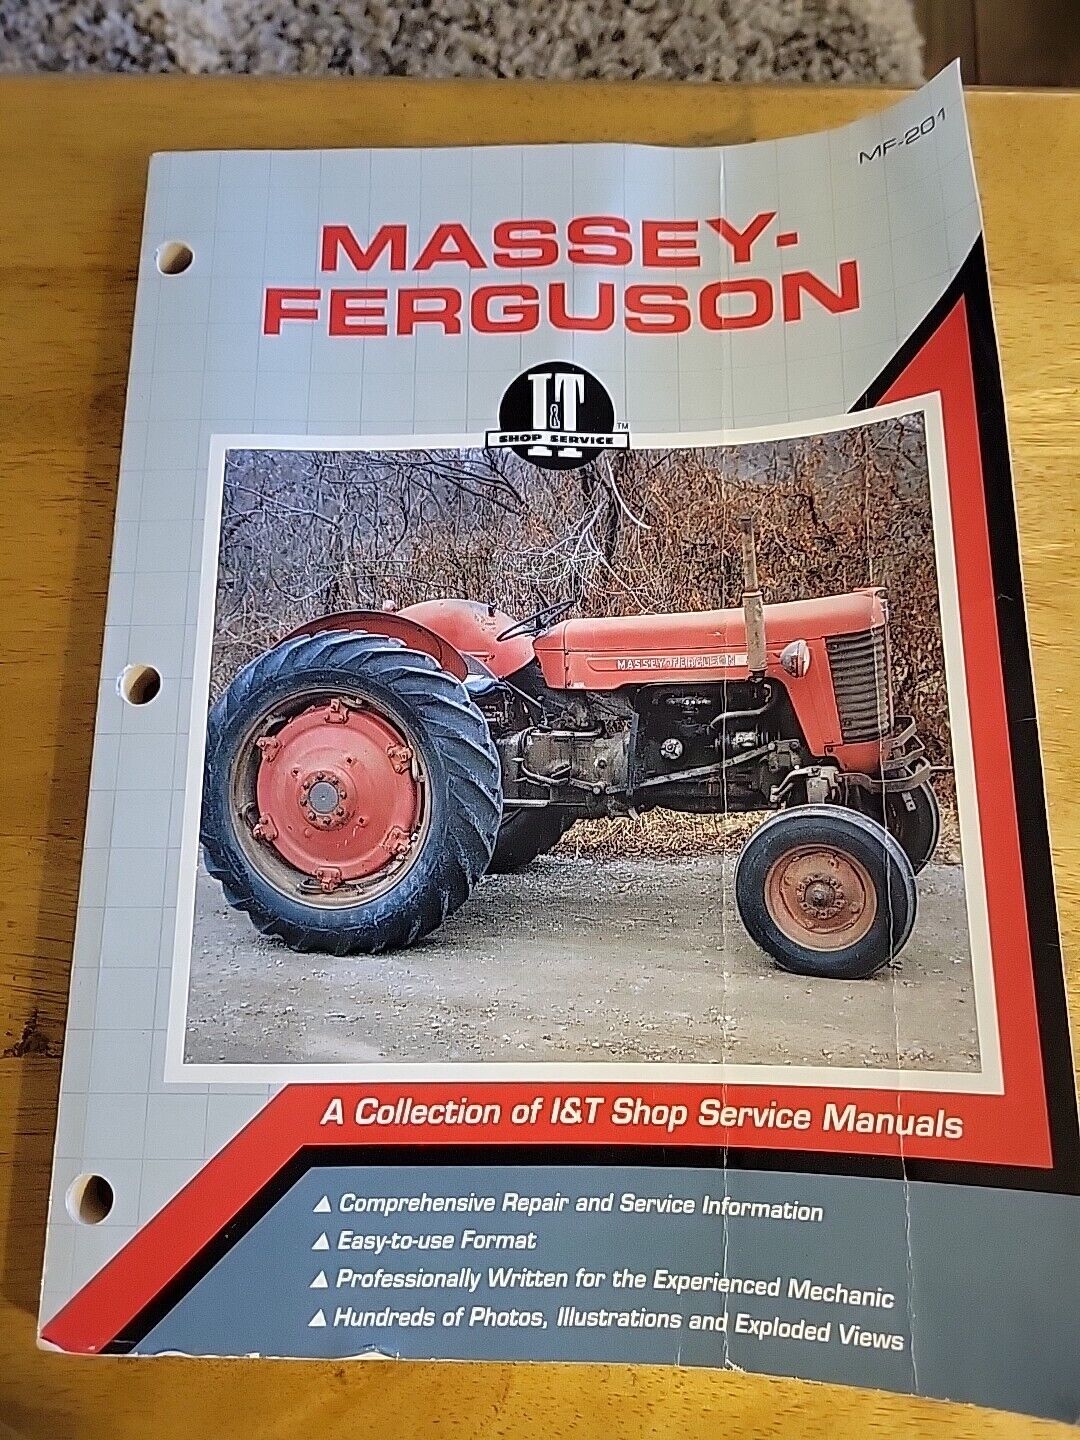 I &T Massey-Ferguson Shop Manual MF-201 for Model MF65 MF1100 MF1155 SUPER 90 WR